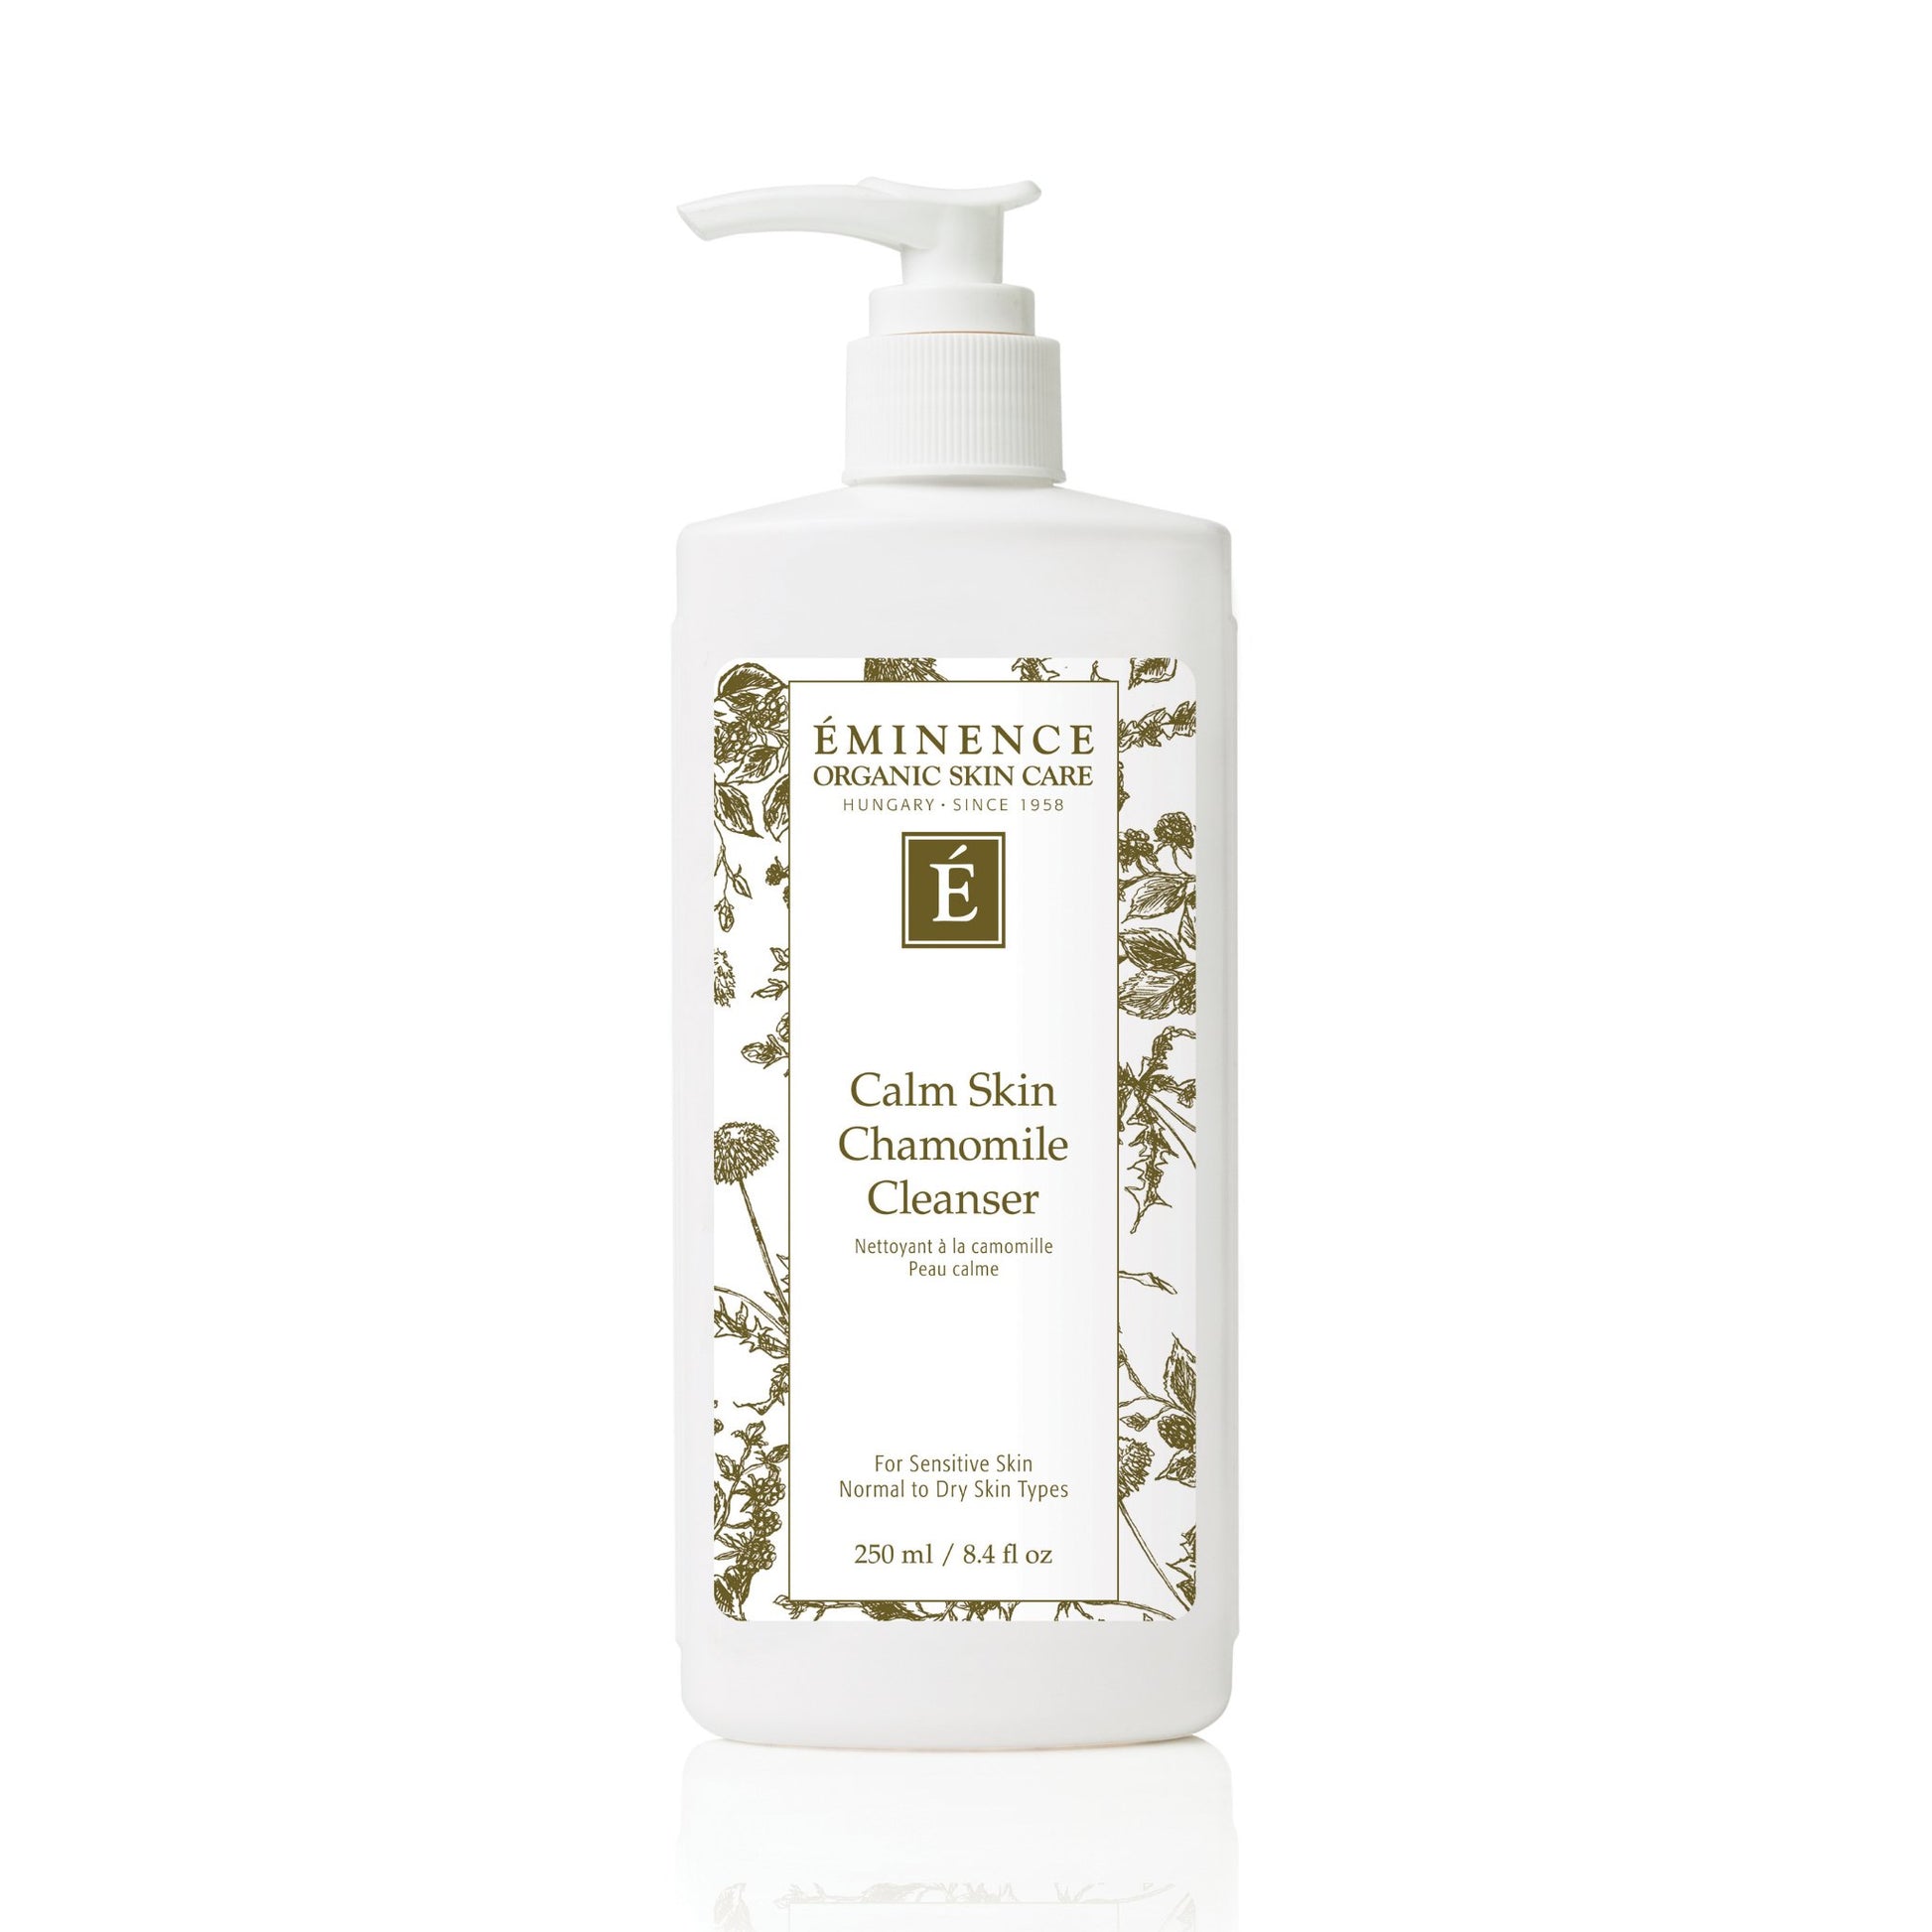 Eminence Organics - Eminence Calm Skin Cleanser - ORESTA clean beauty simplified